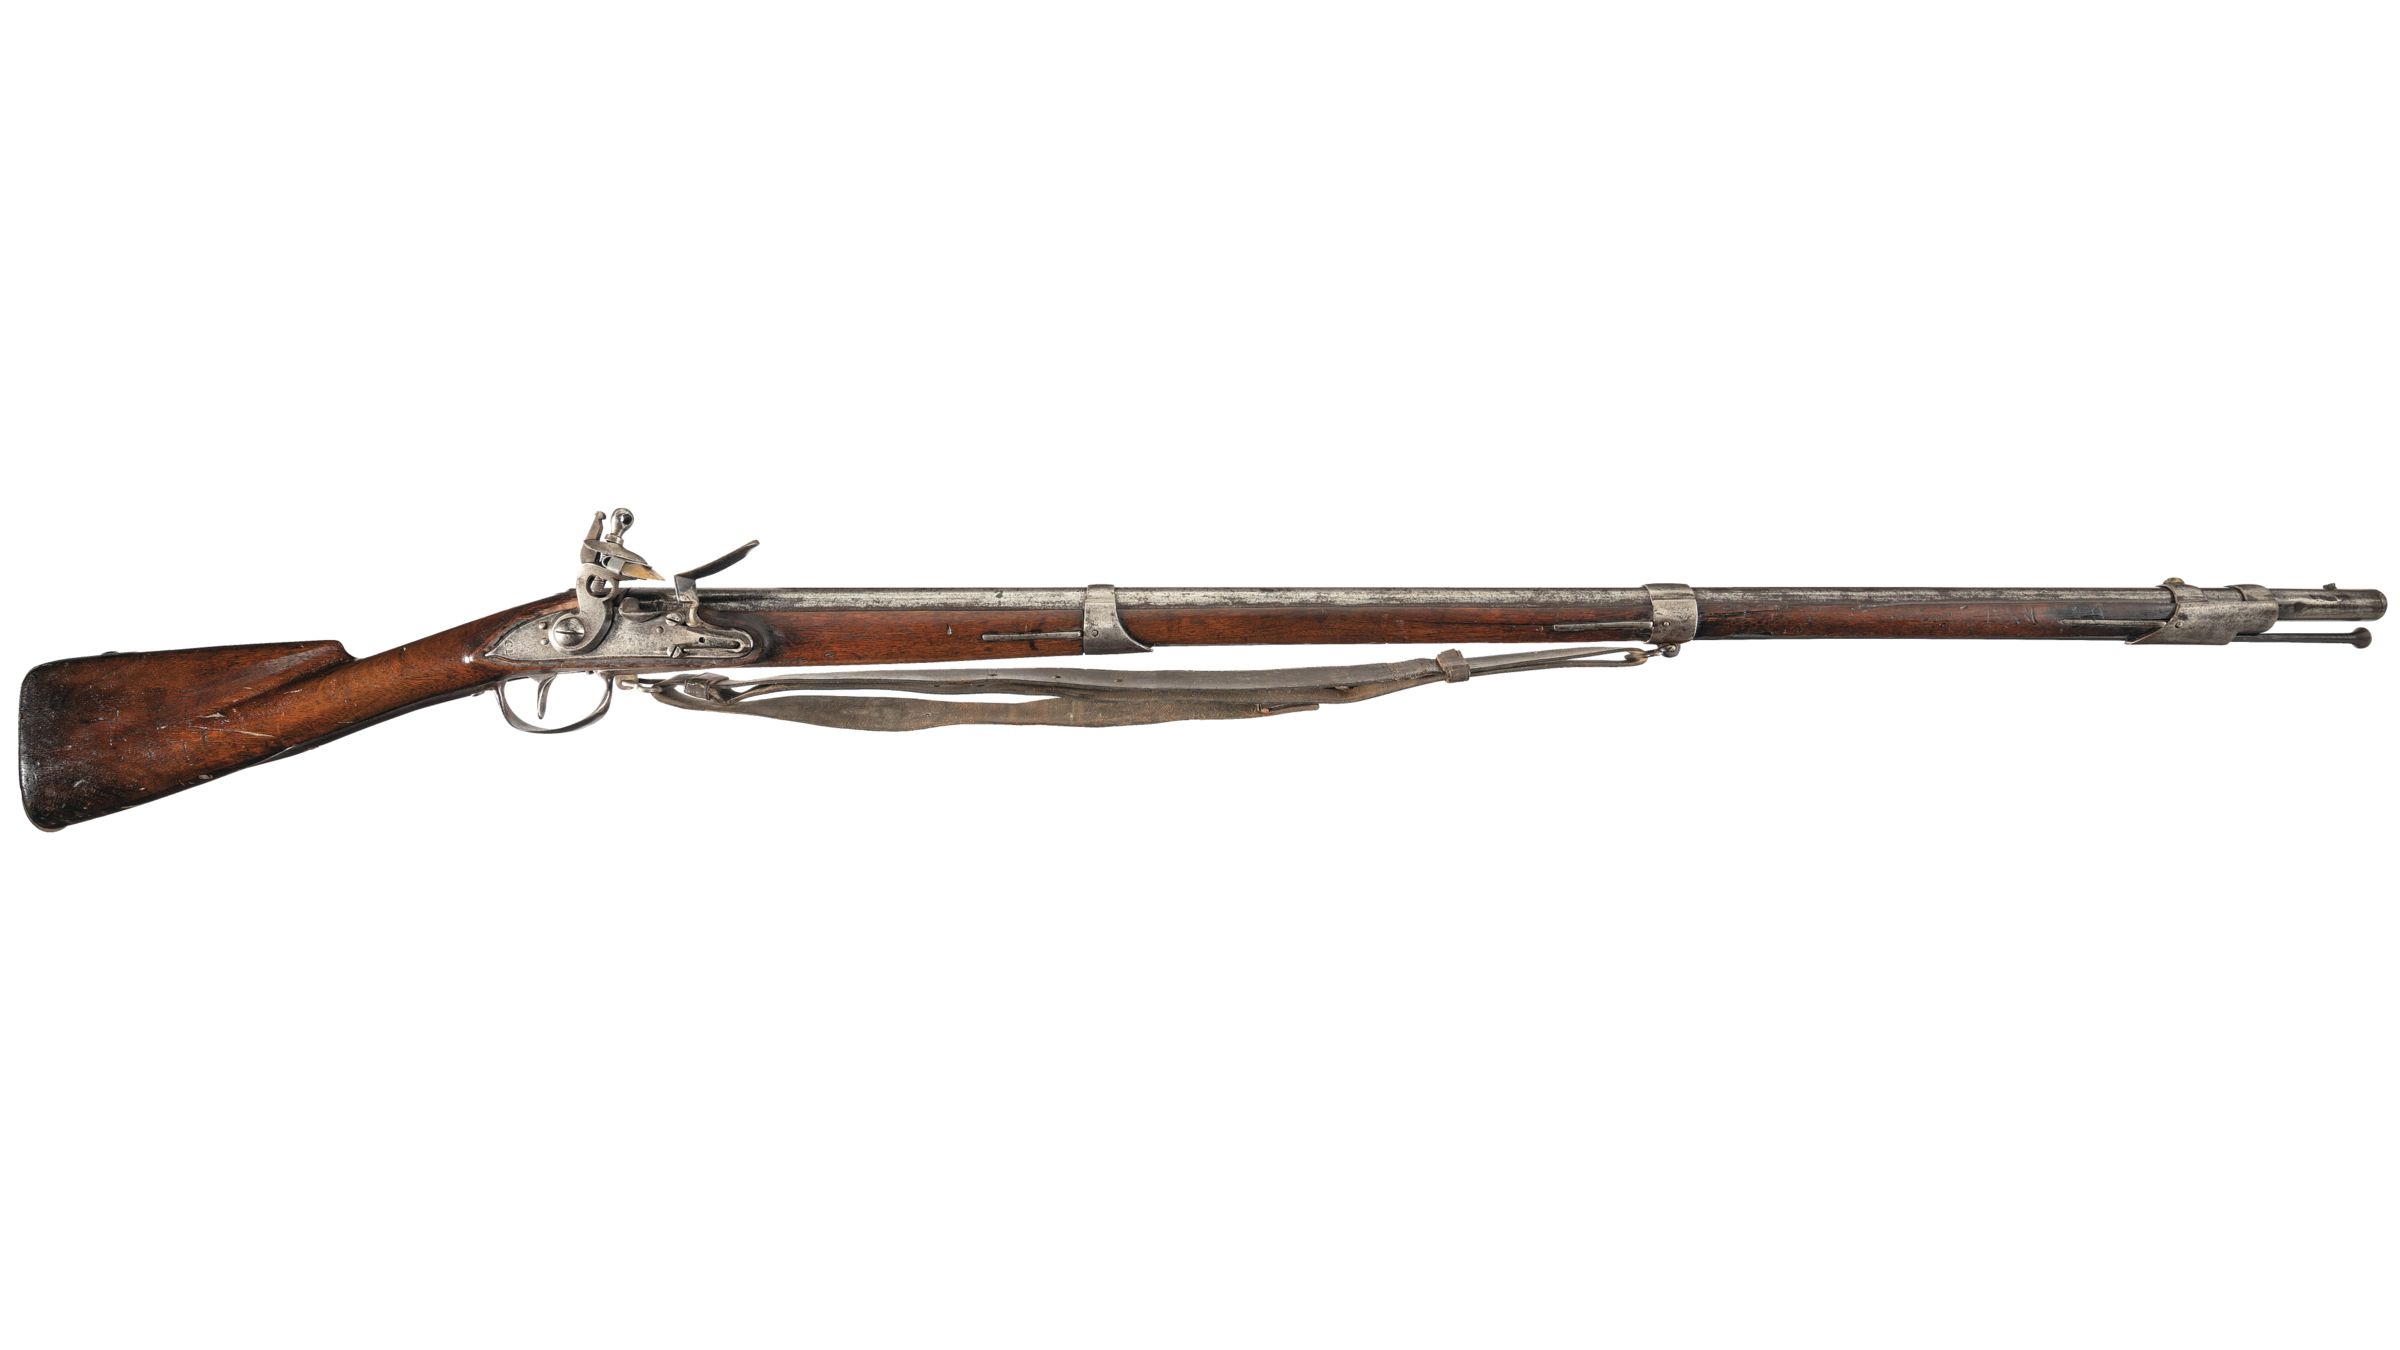 Commonwealth of Pennsylvania Flintlock Musket | Rock Island Auction